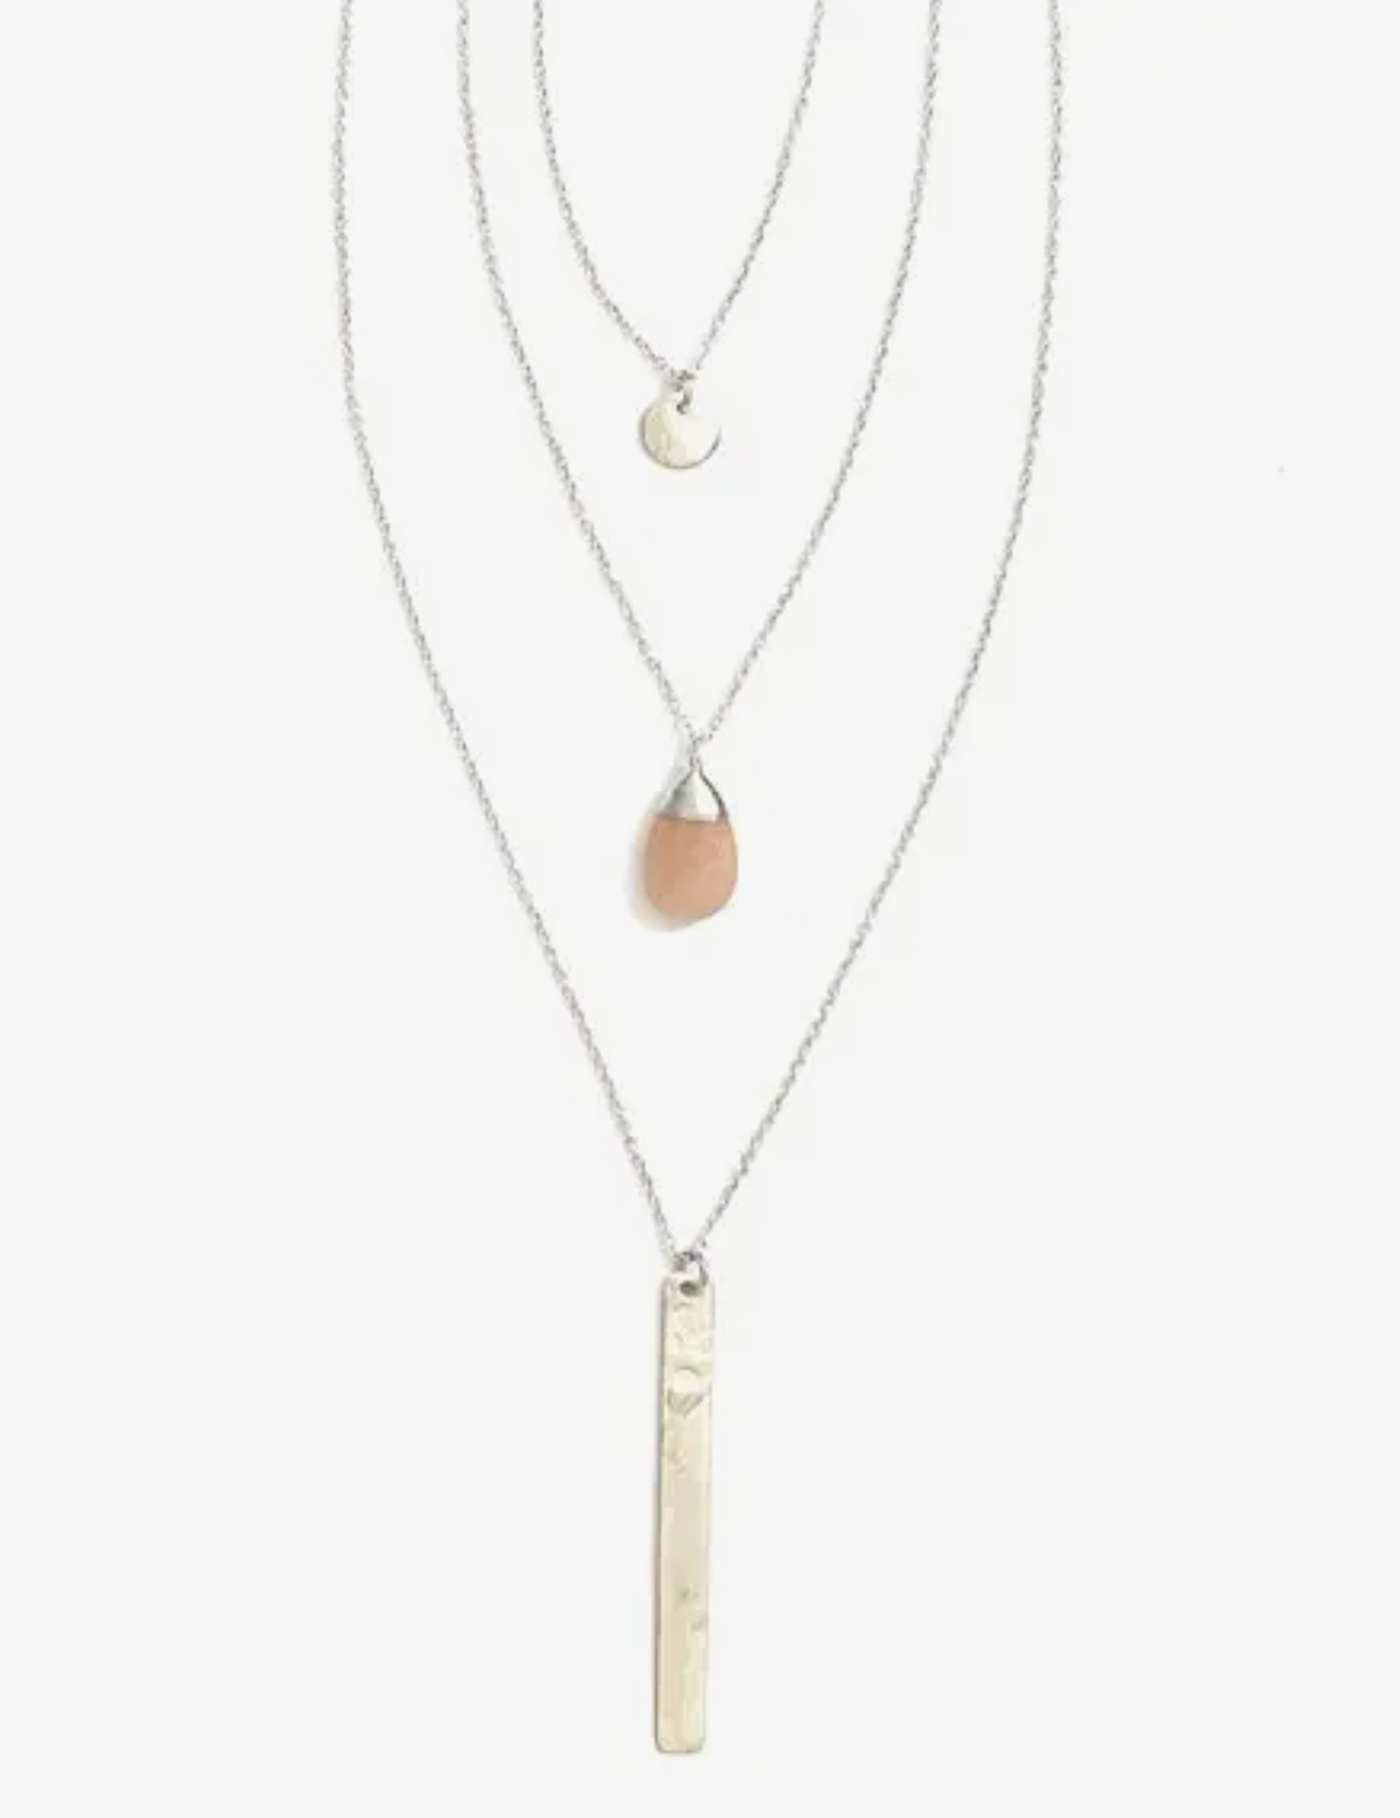 Triple Strand Multi-Way Pendant Necklace - Silver